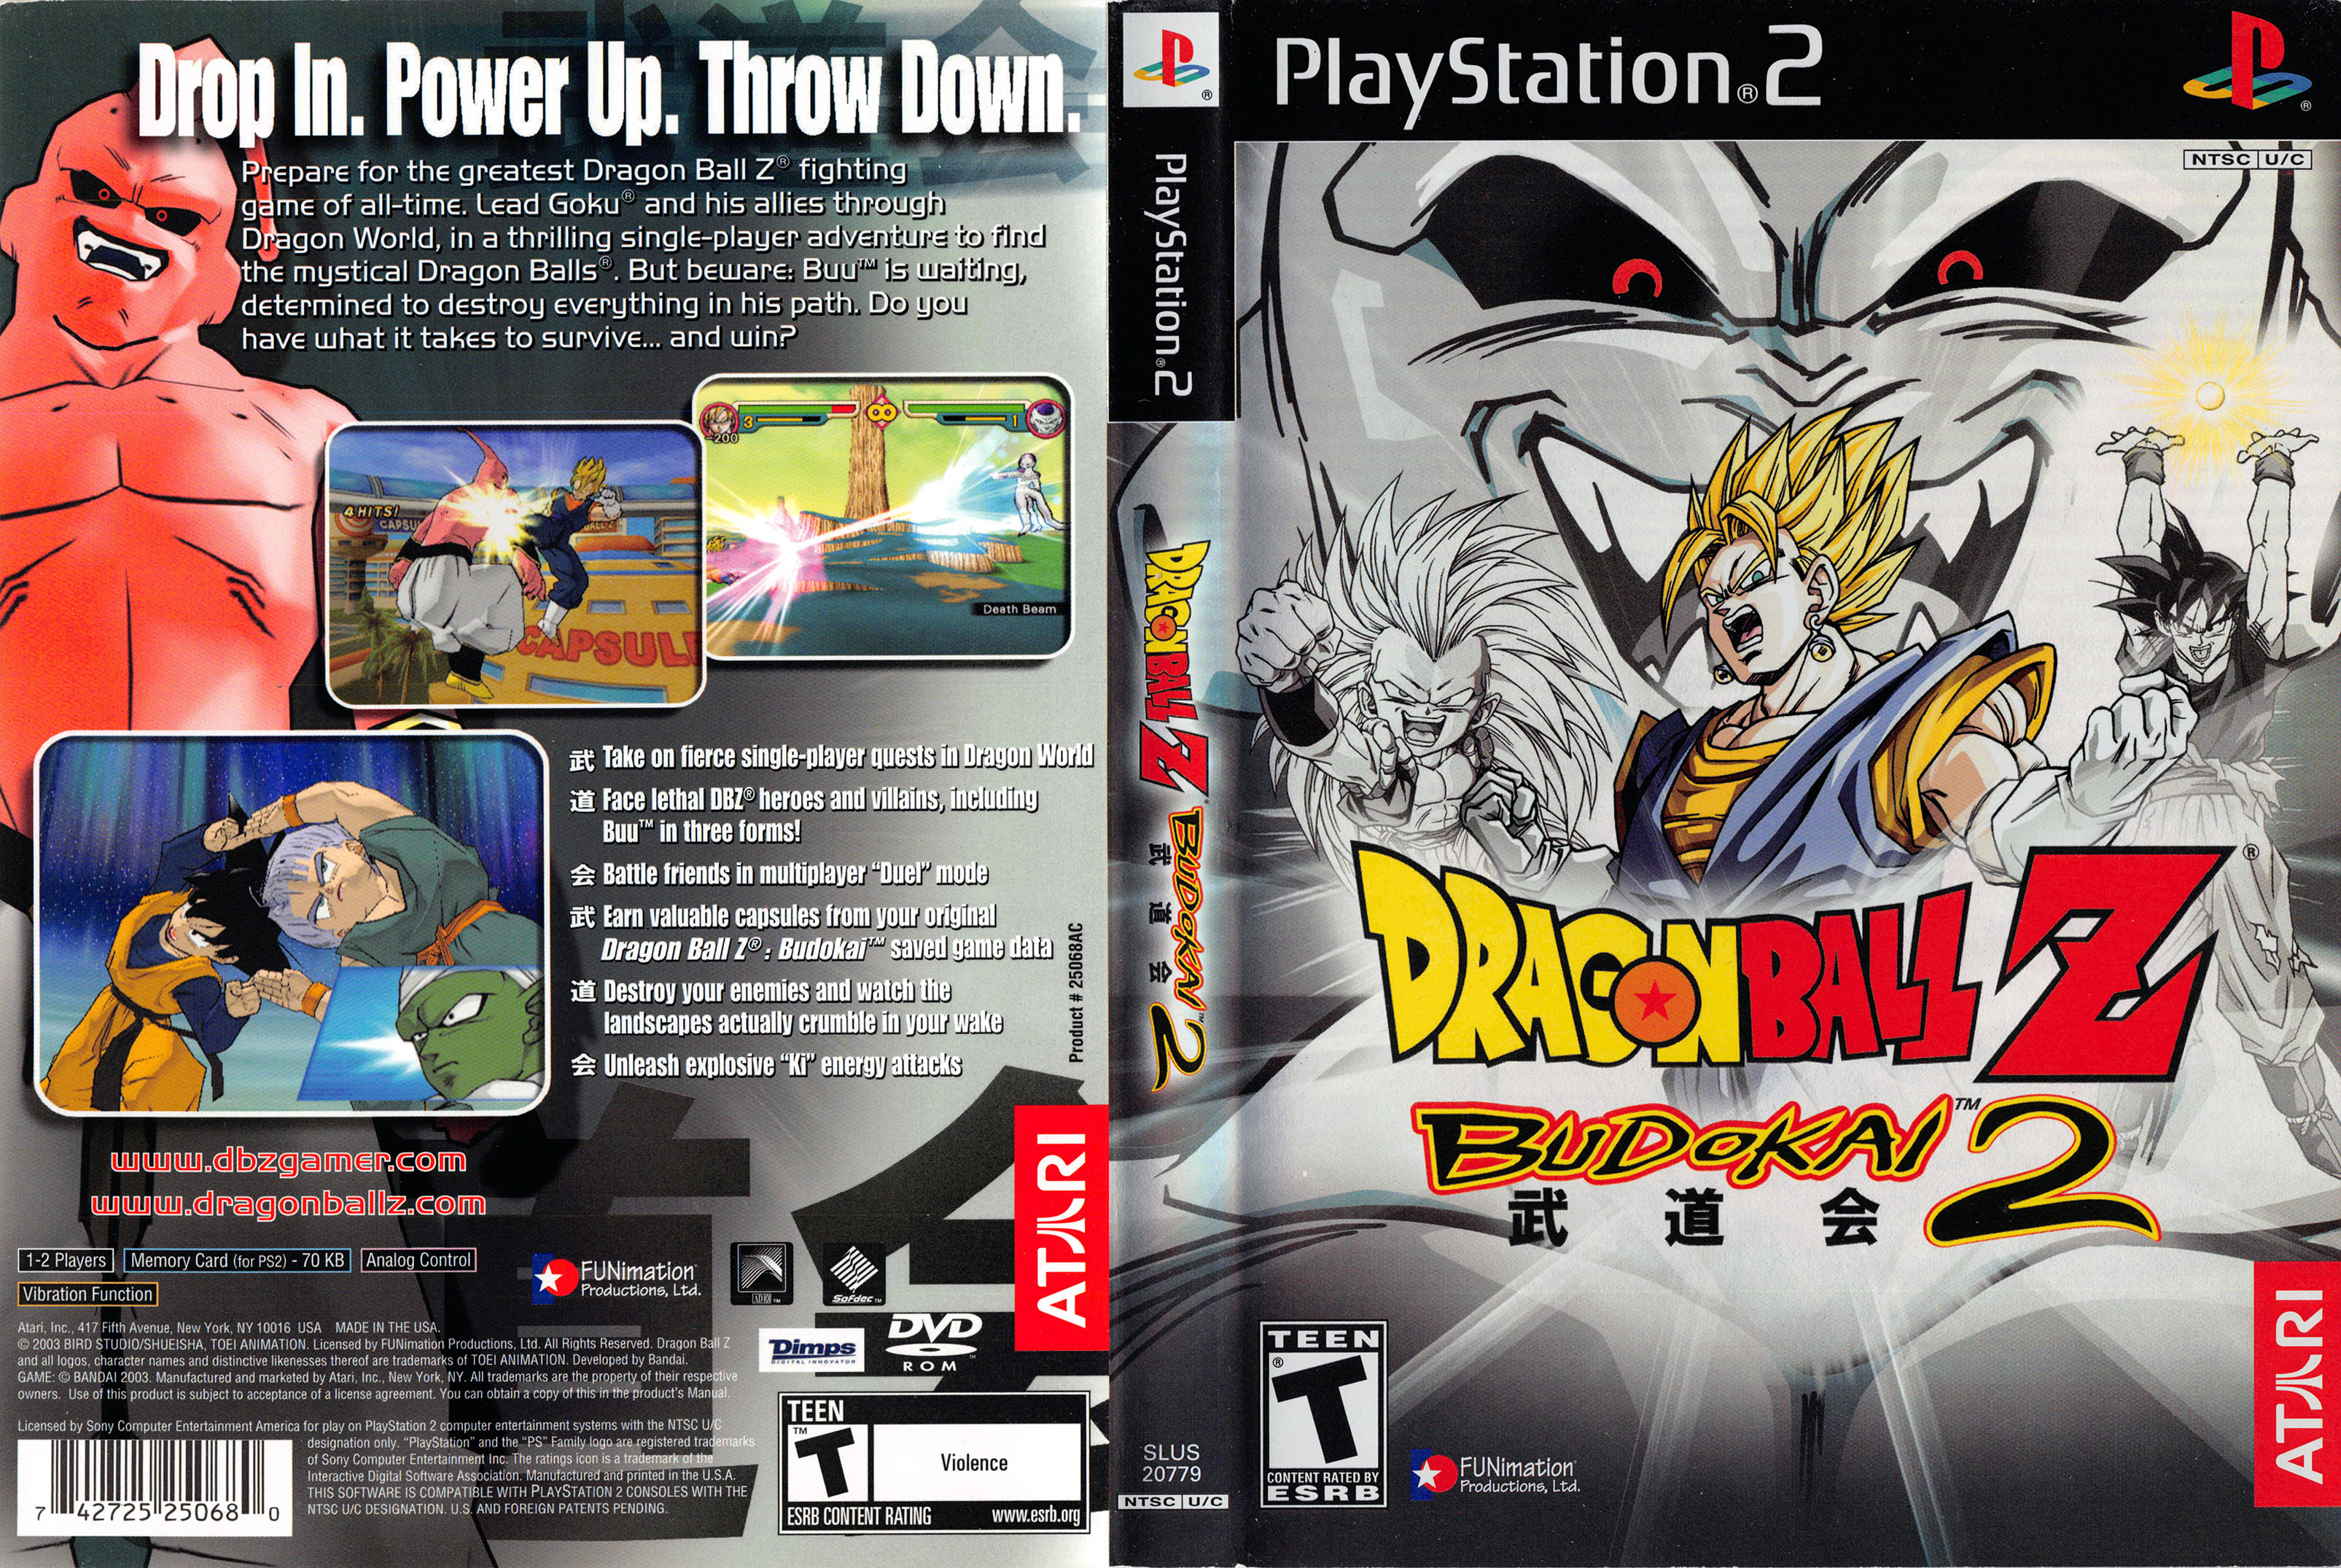 Dragon Ball Z - Budokai 2 PS2 cover